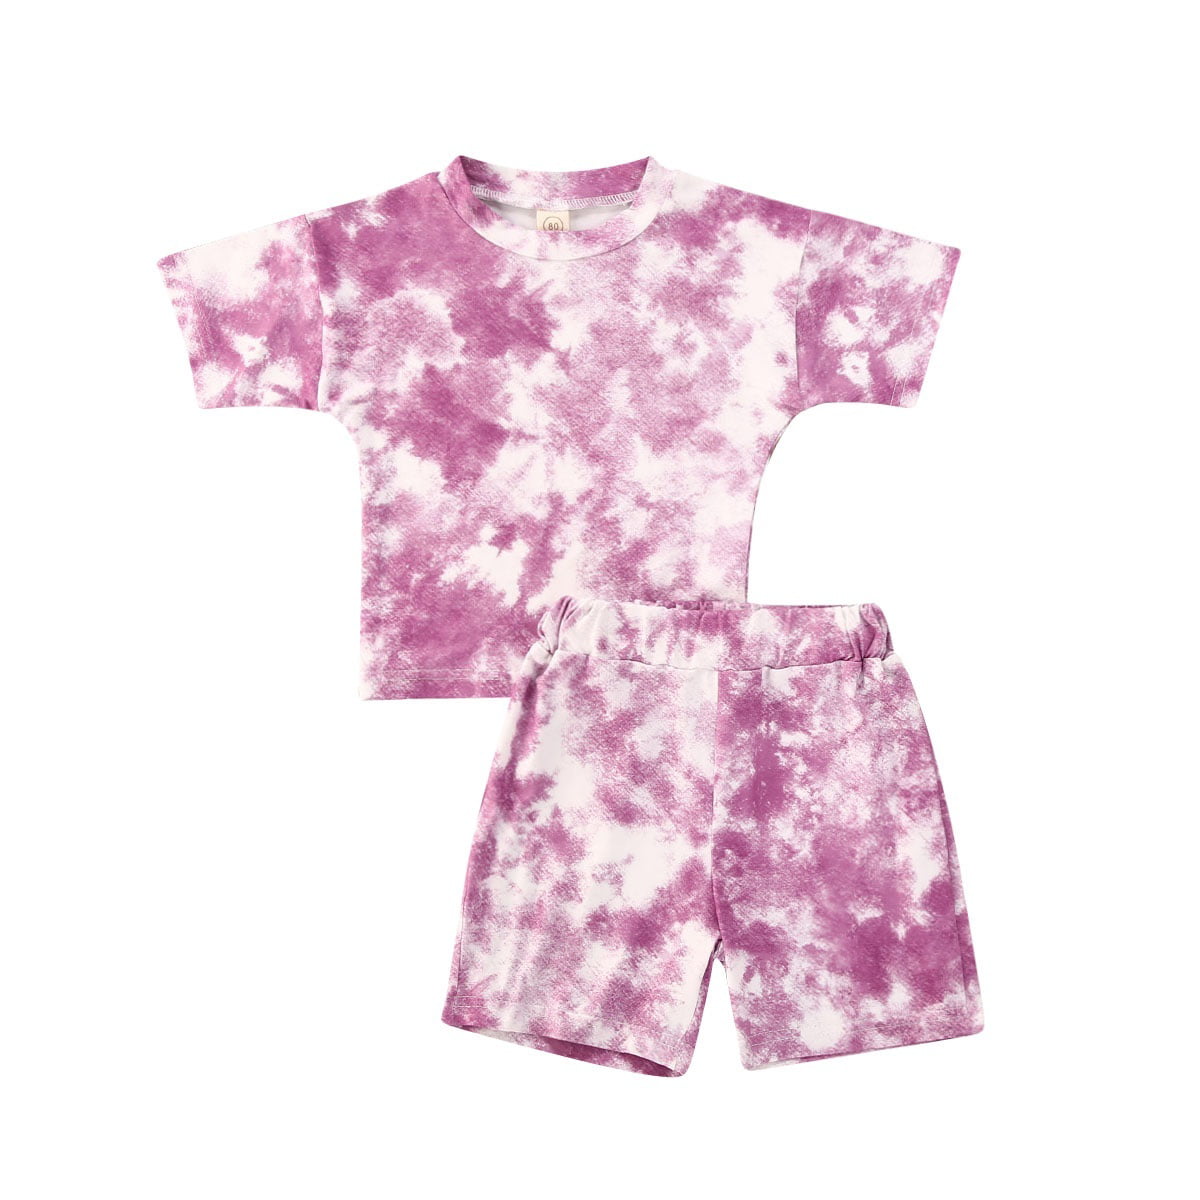 Arshiner Kids 2 Pack Short Sleeve Tees Girls Cotton Tees 2pcs Shirt for Tie Dye 